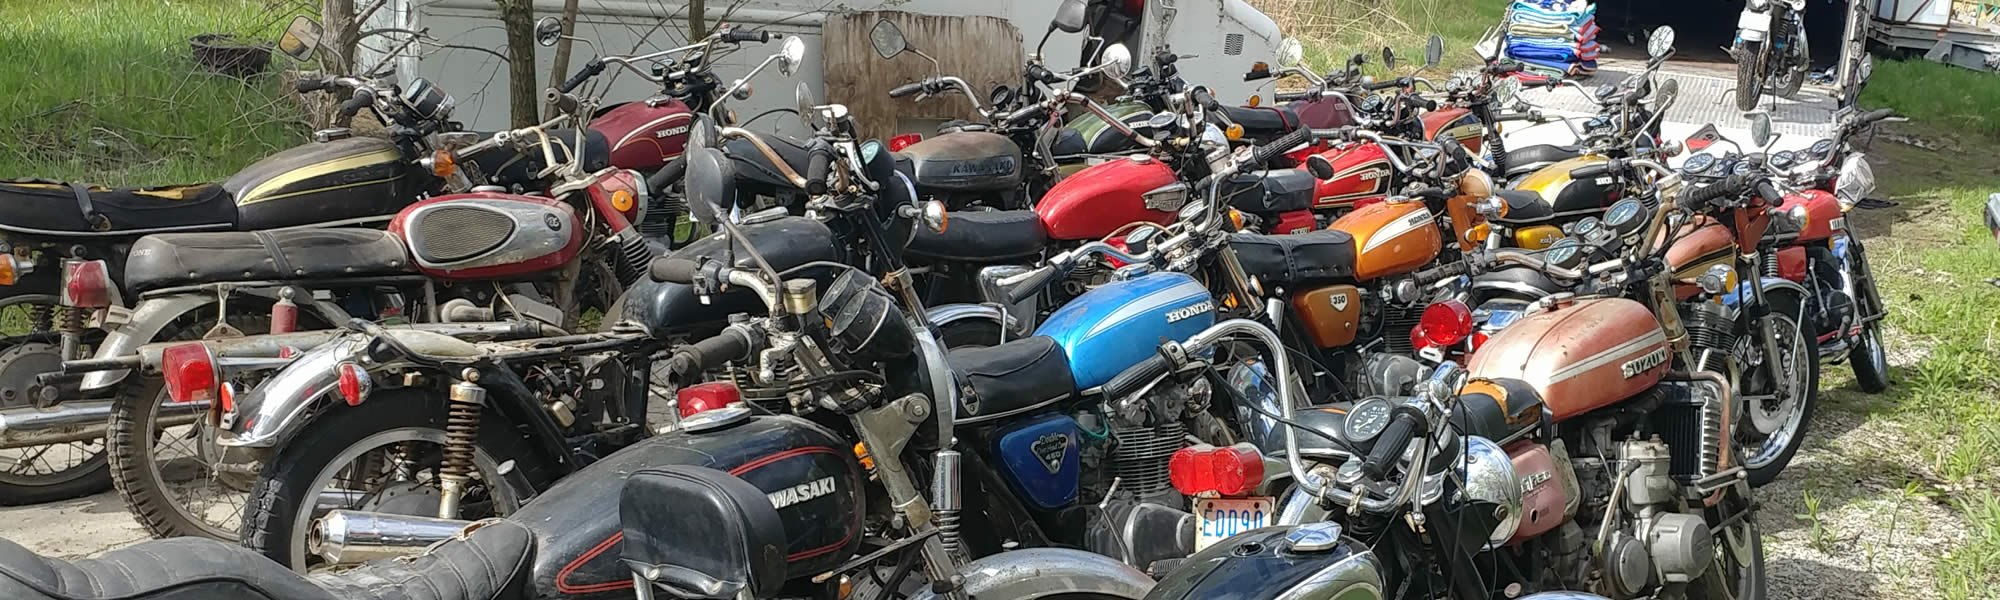 Cash for Old/Vintage Motorcycles